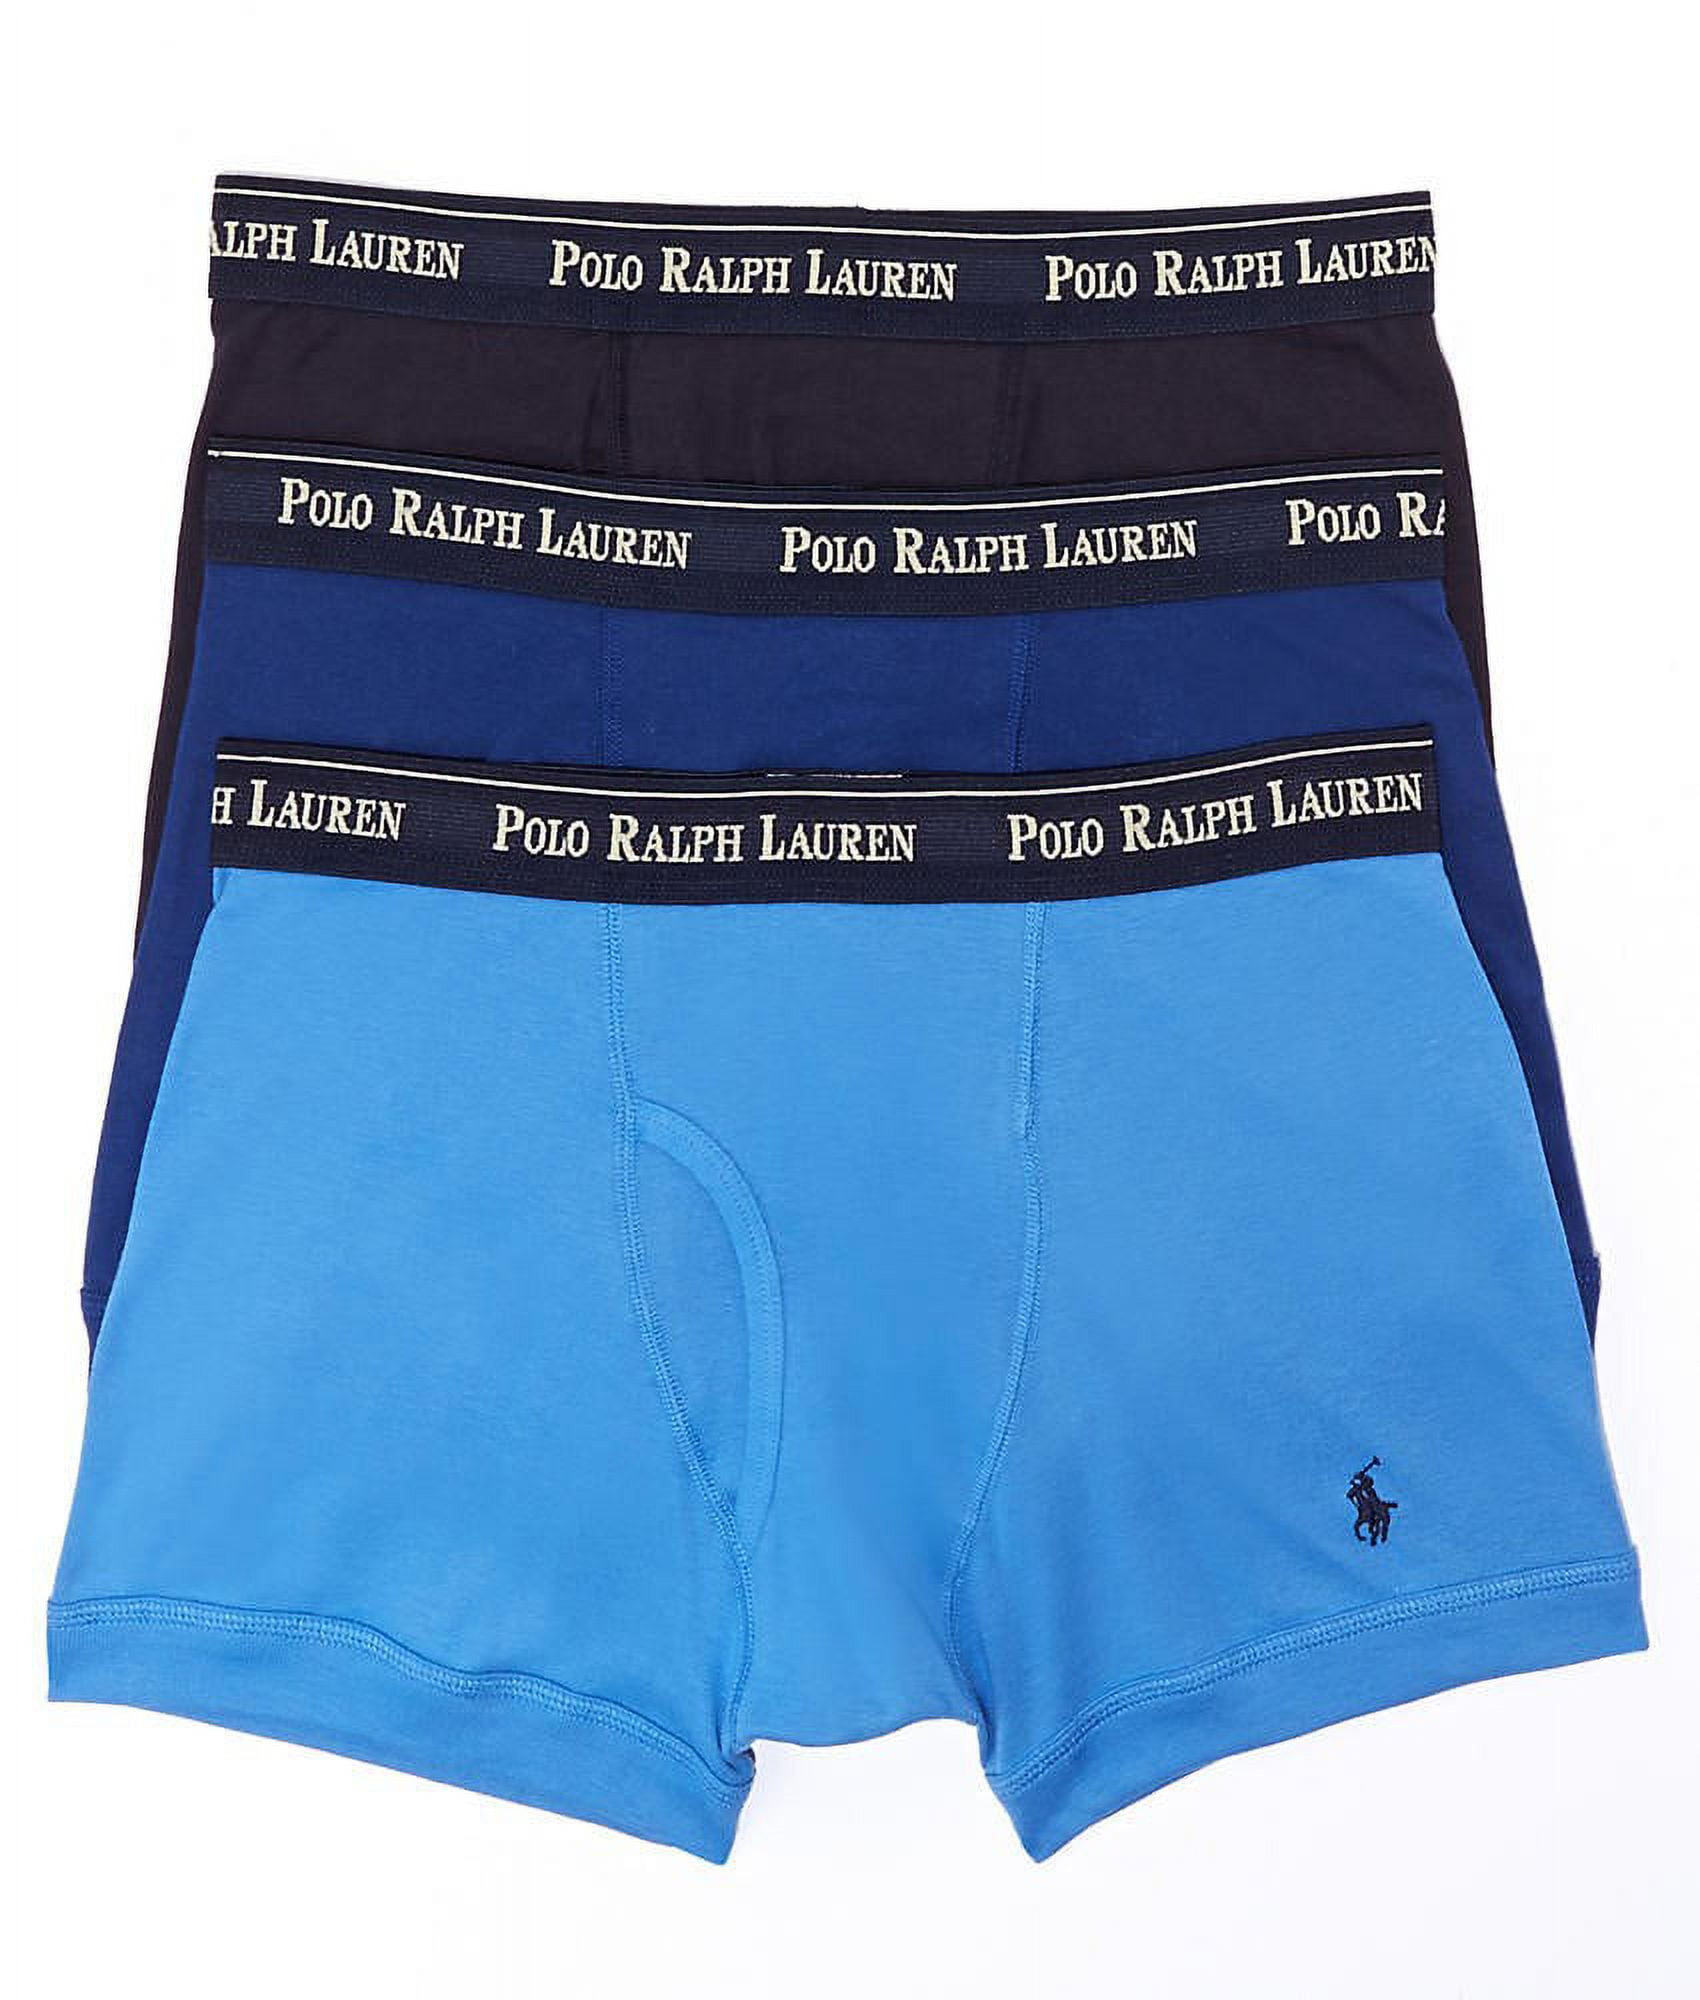 Polo Ralph Lauren Men's Classic Fit Boxer Briefs underwear 6-pack Black Red  Navy